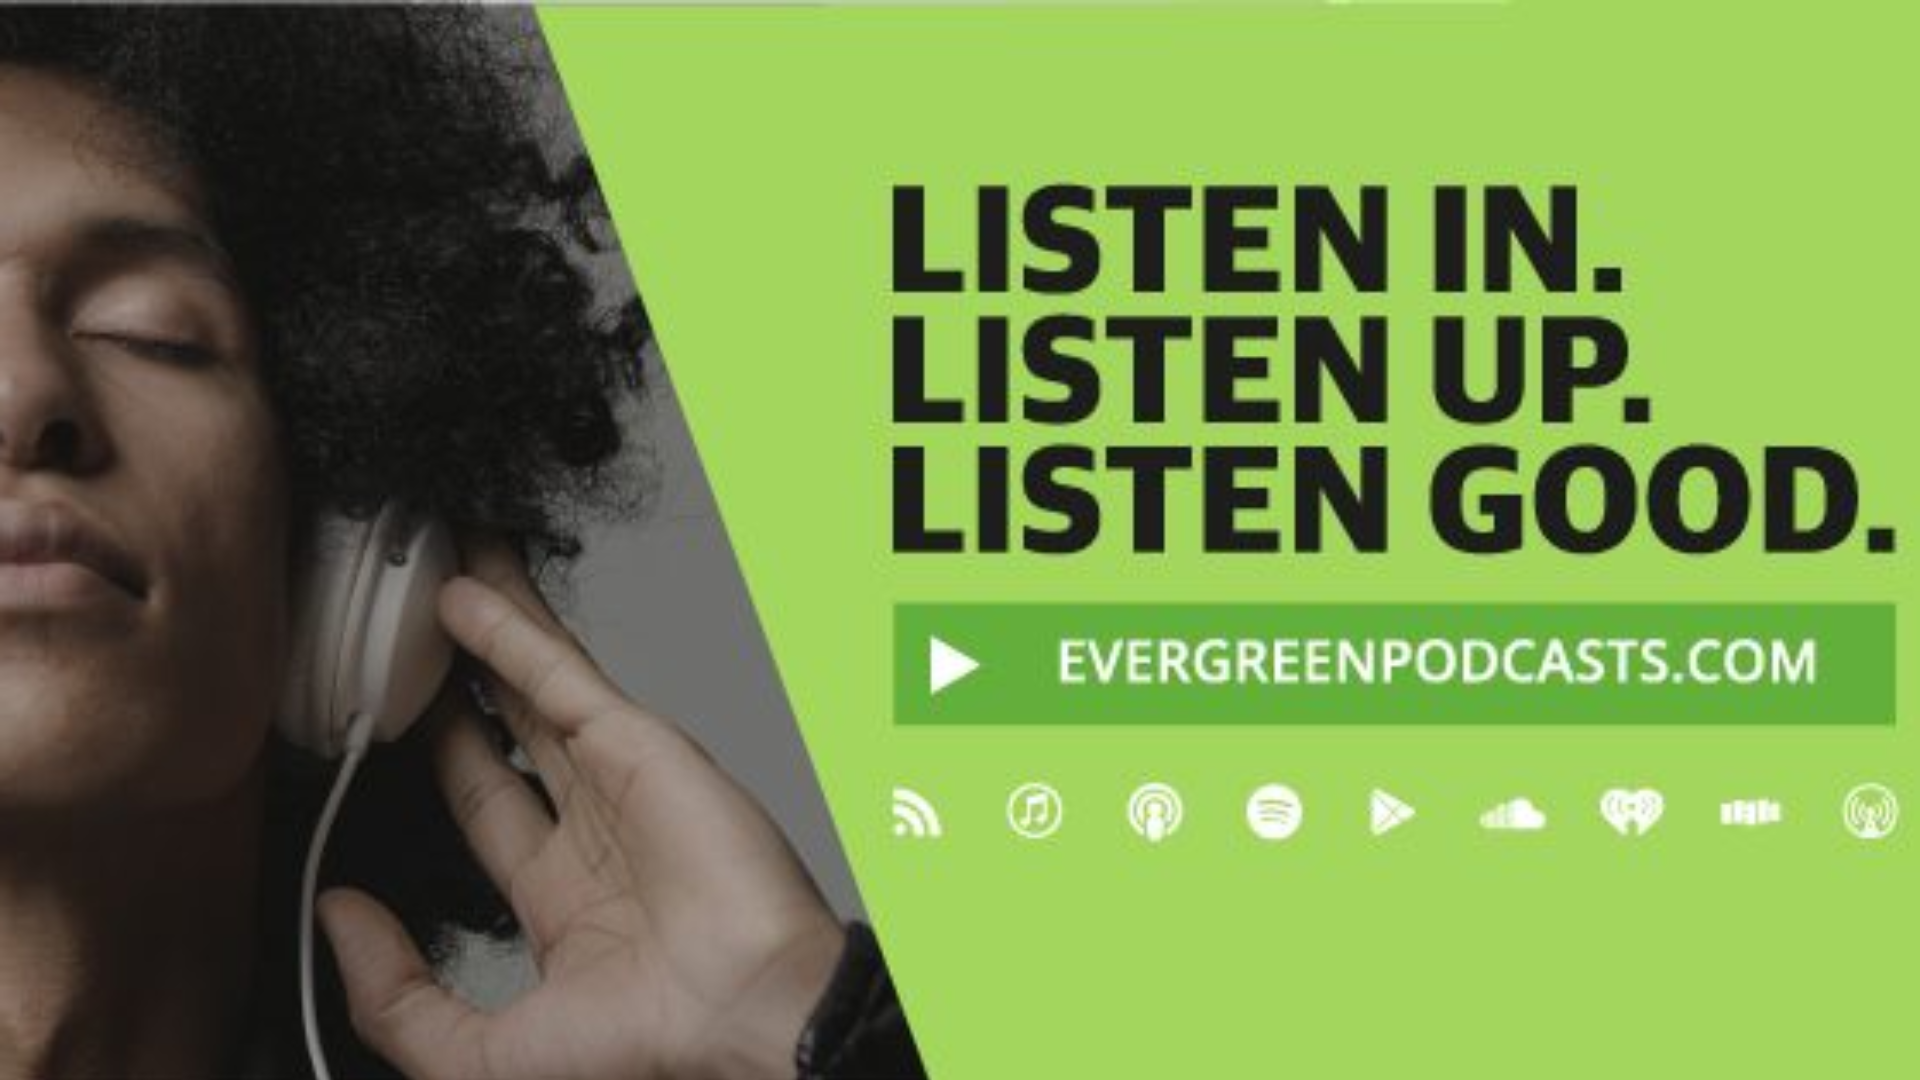 Evergreen Podcasts Wins World Future Awards as Best Podcast Platform